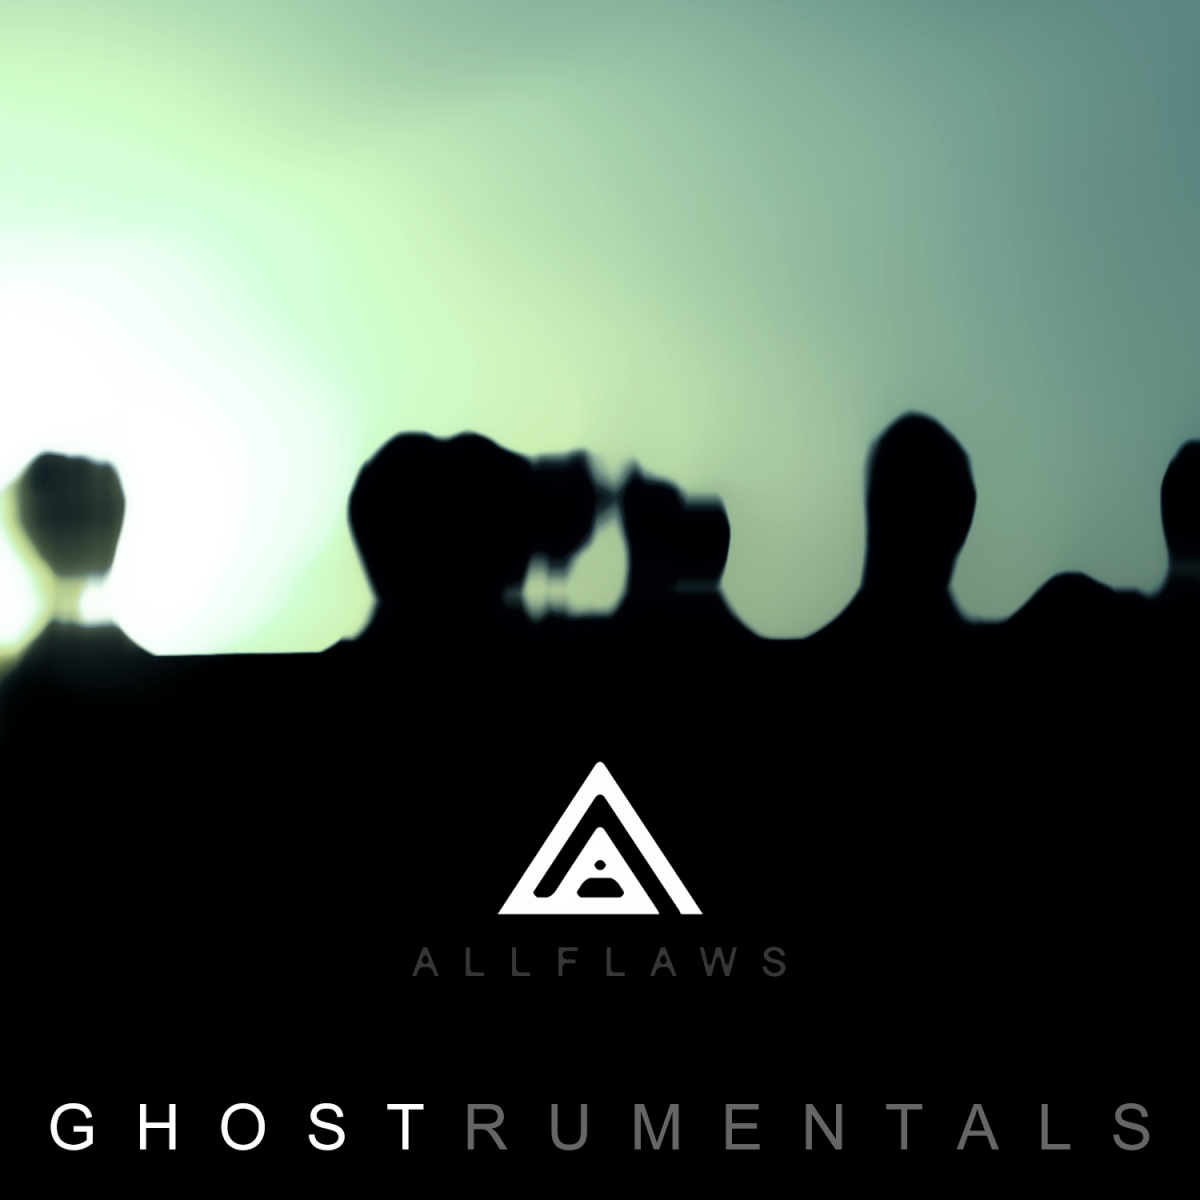 ALLFLAWS – GHOSTRUMENTALS – Full Album (Trip Hop, Industrial Hip Hop, Dub, Breakbeat, Instrumental Hip Hop, Dark Electro)